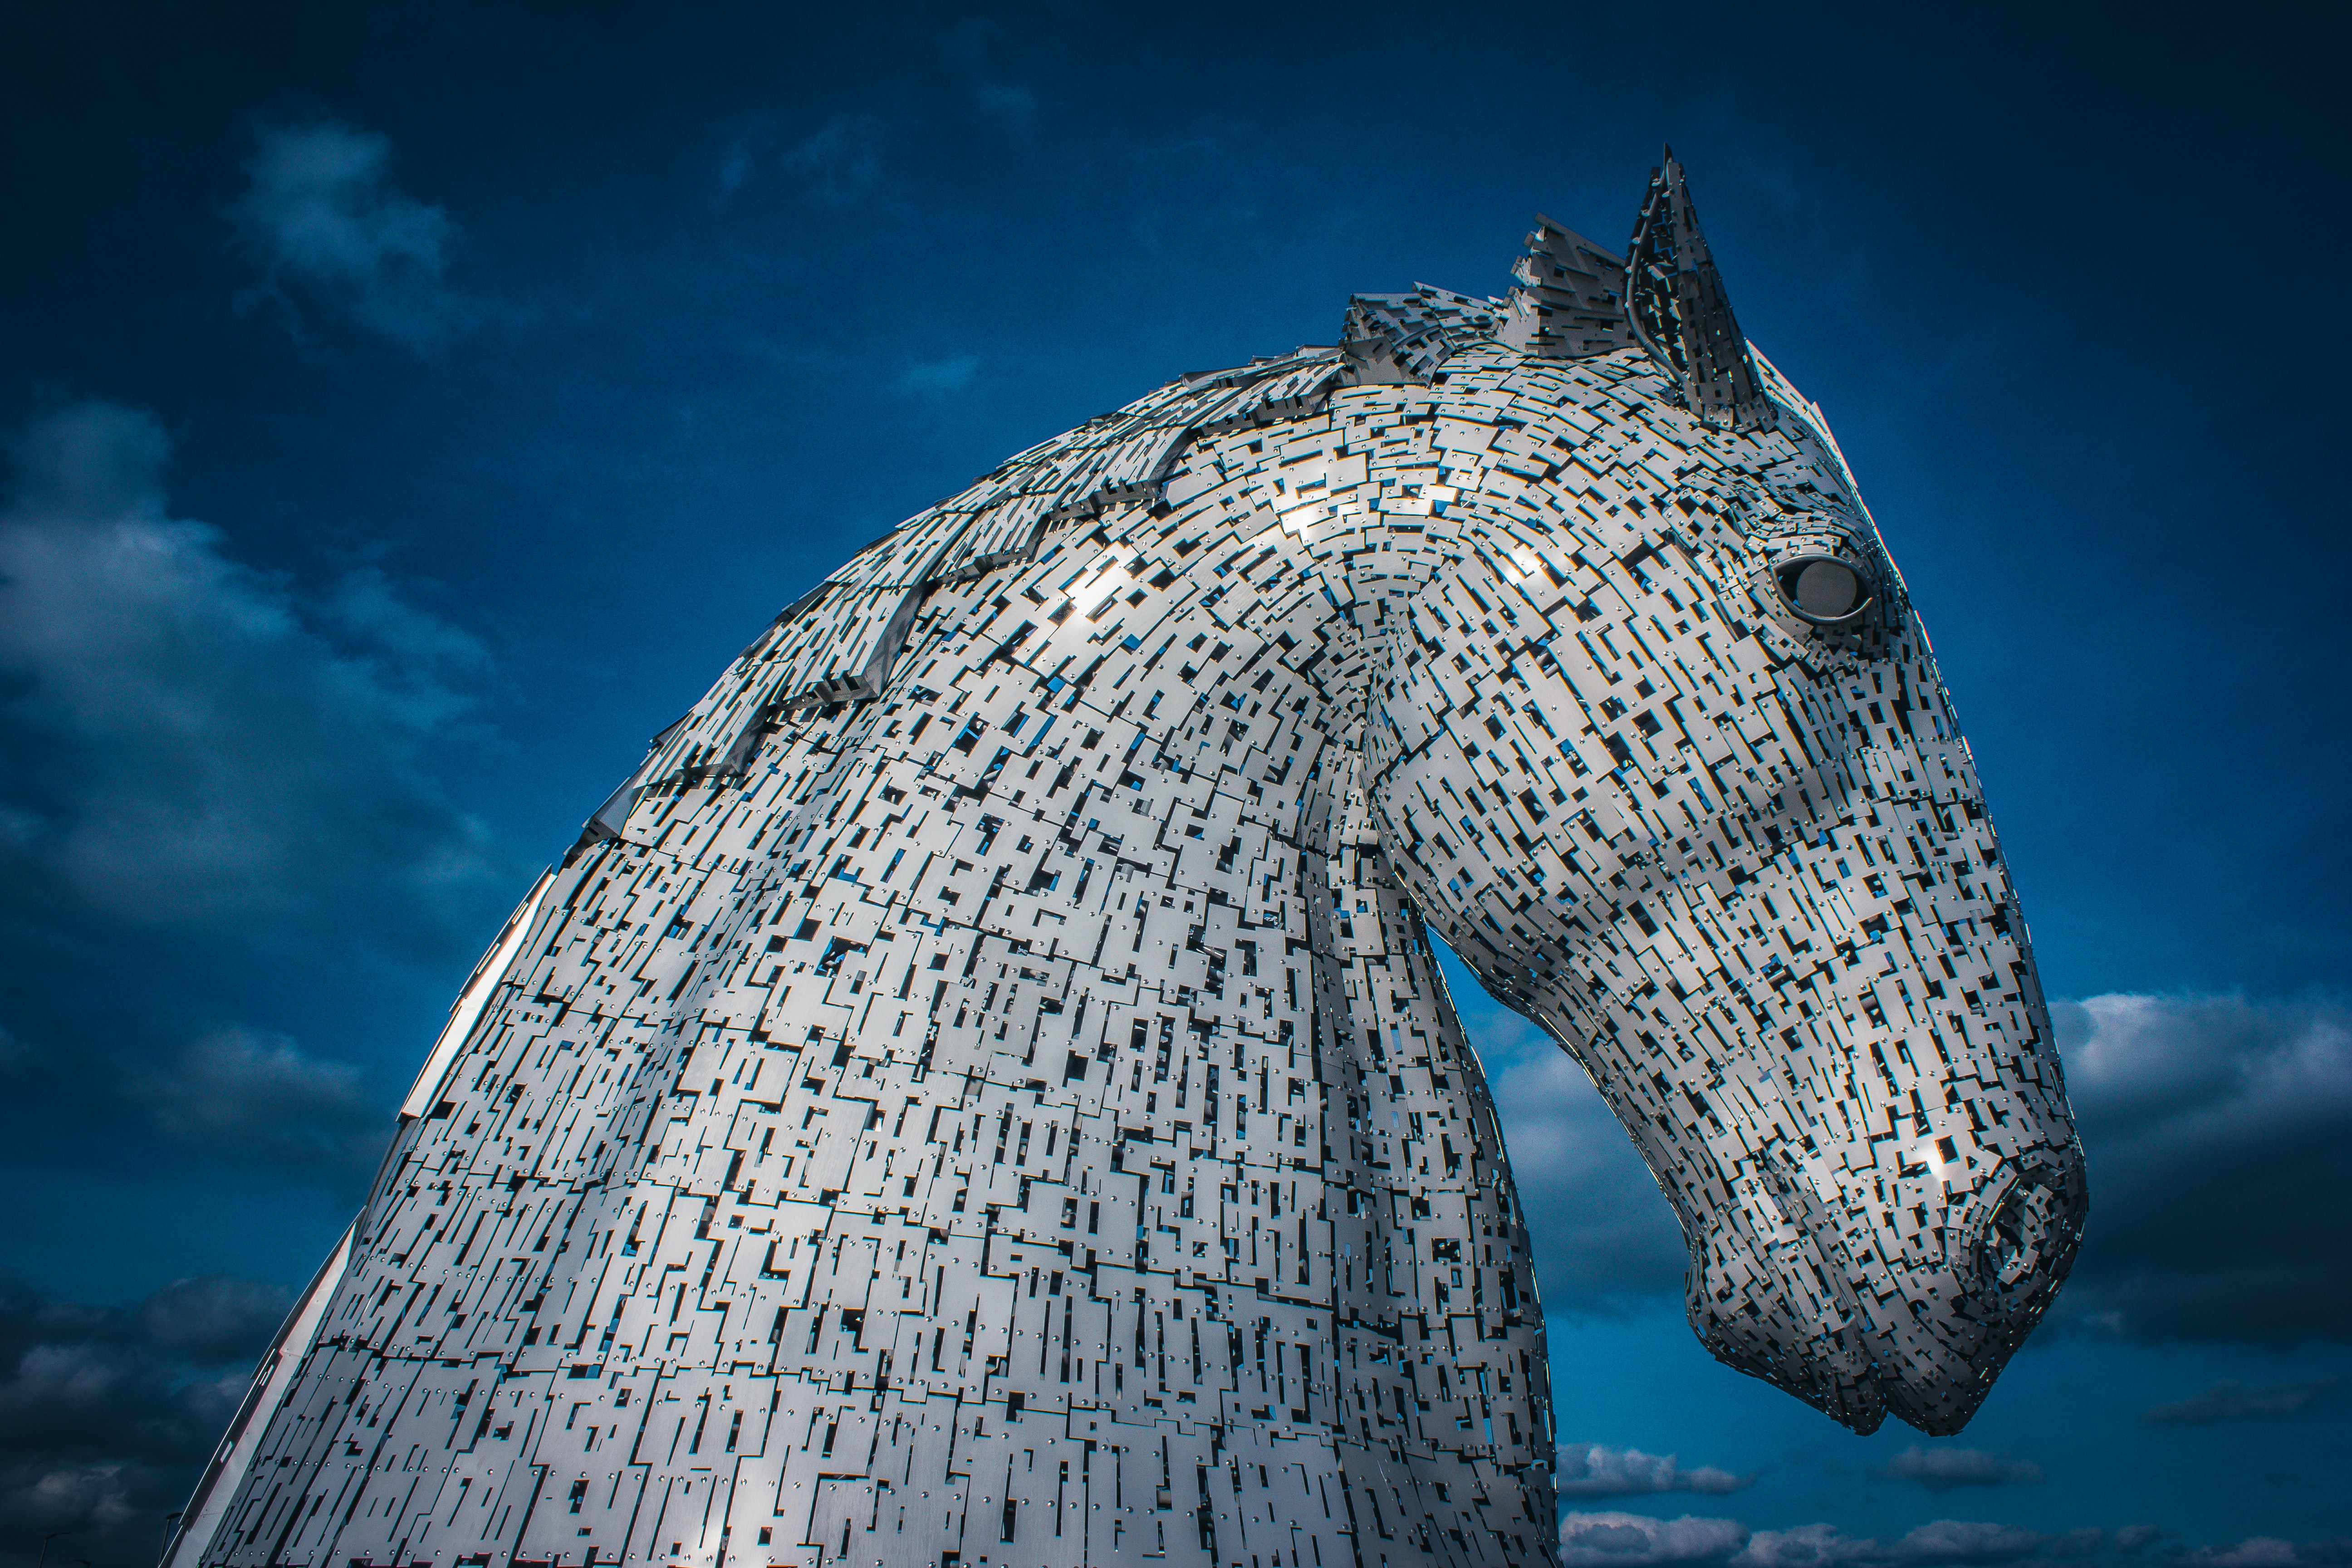 metal horse sculpture against blue sky